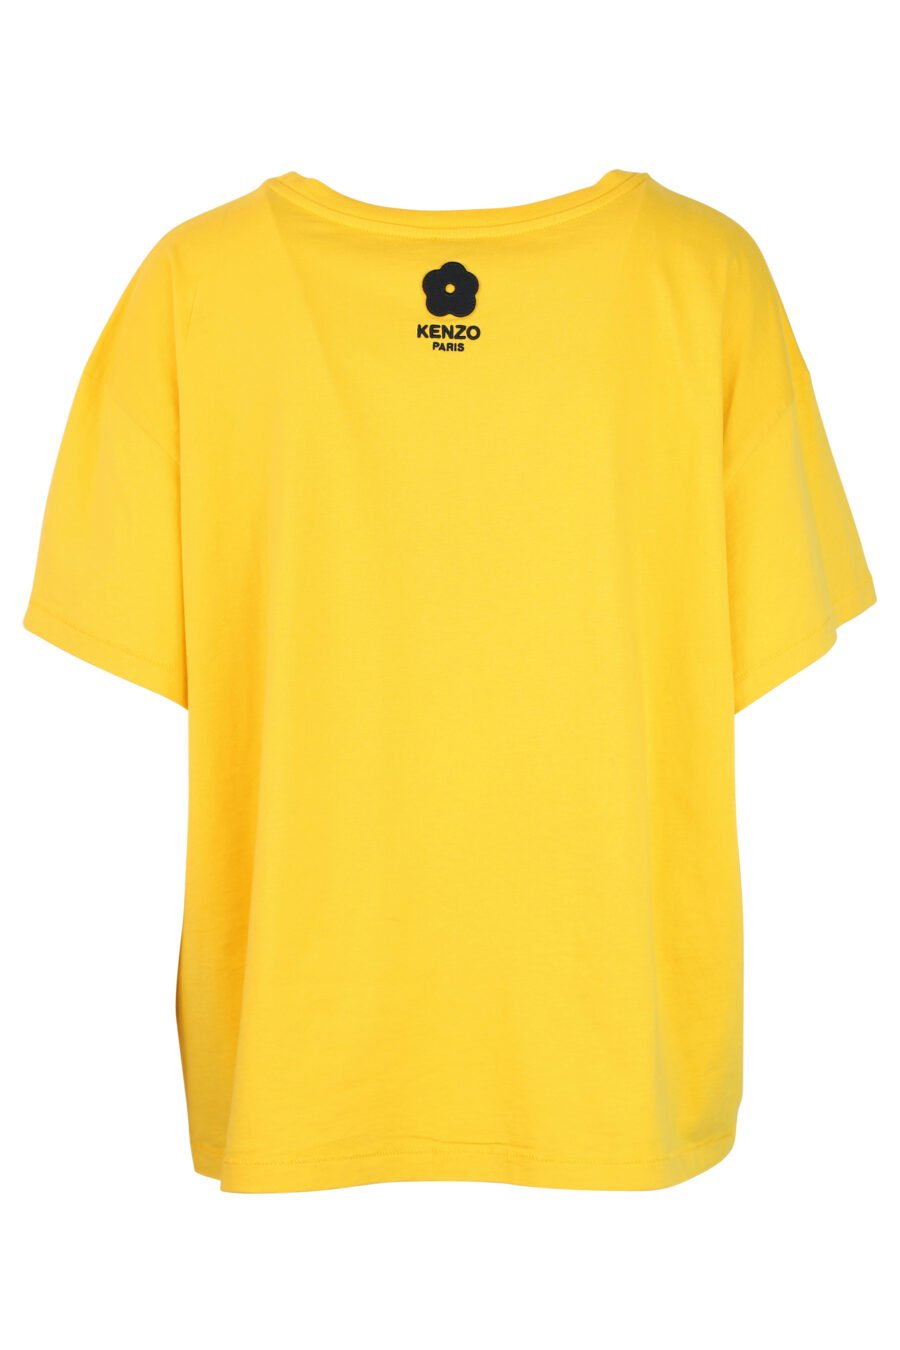 Gelbes T-Shirt mit Elefanten-Maxilogo - 3612230460065 2